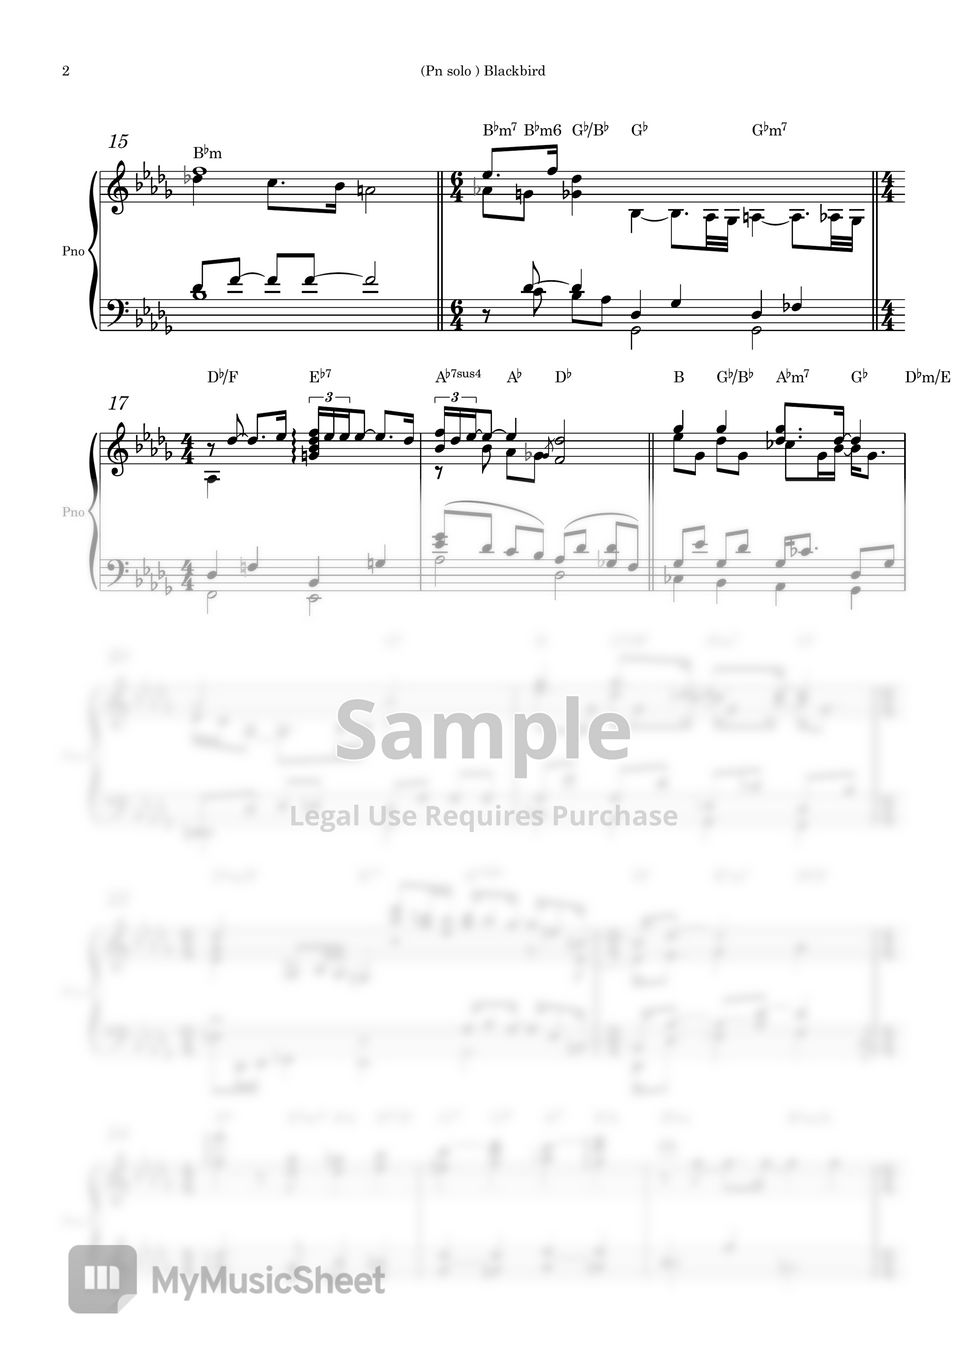 Paul McCartney - Blackbird (piano solo) by Piano QQQ